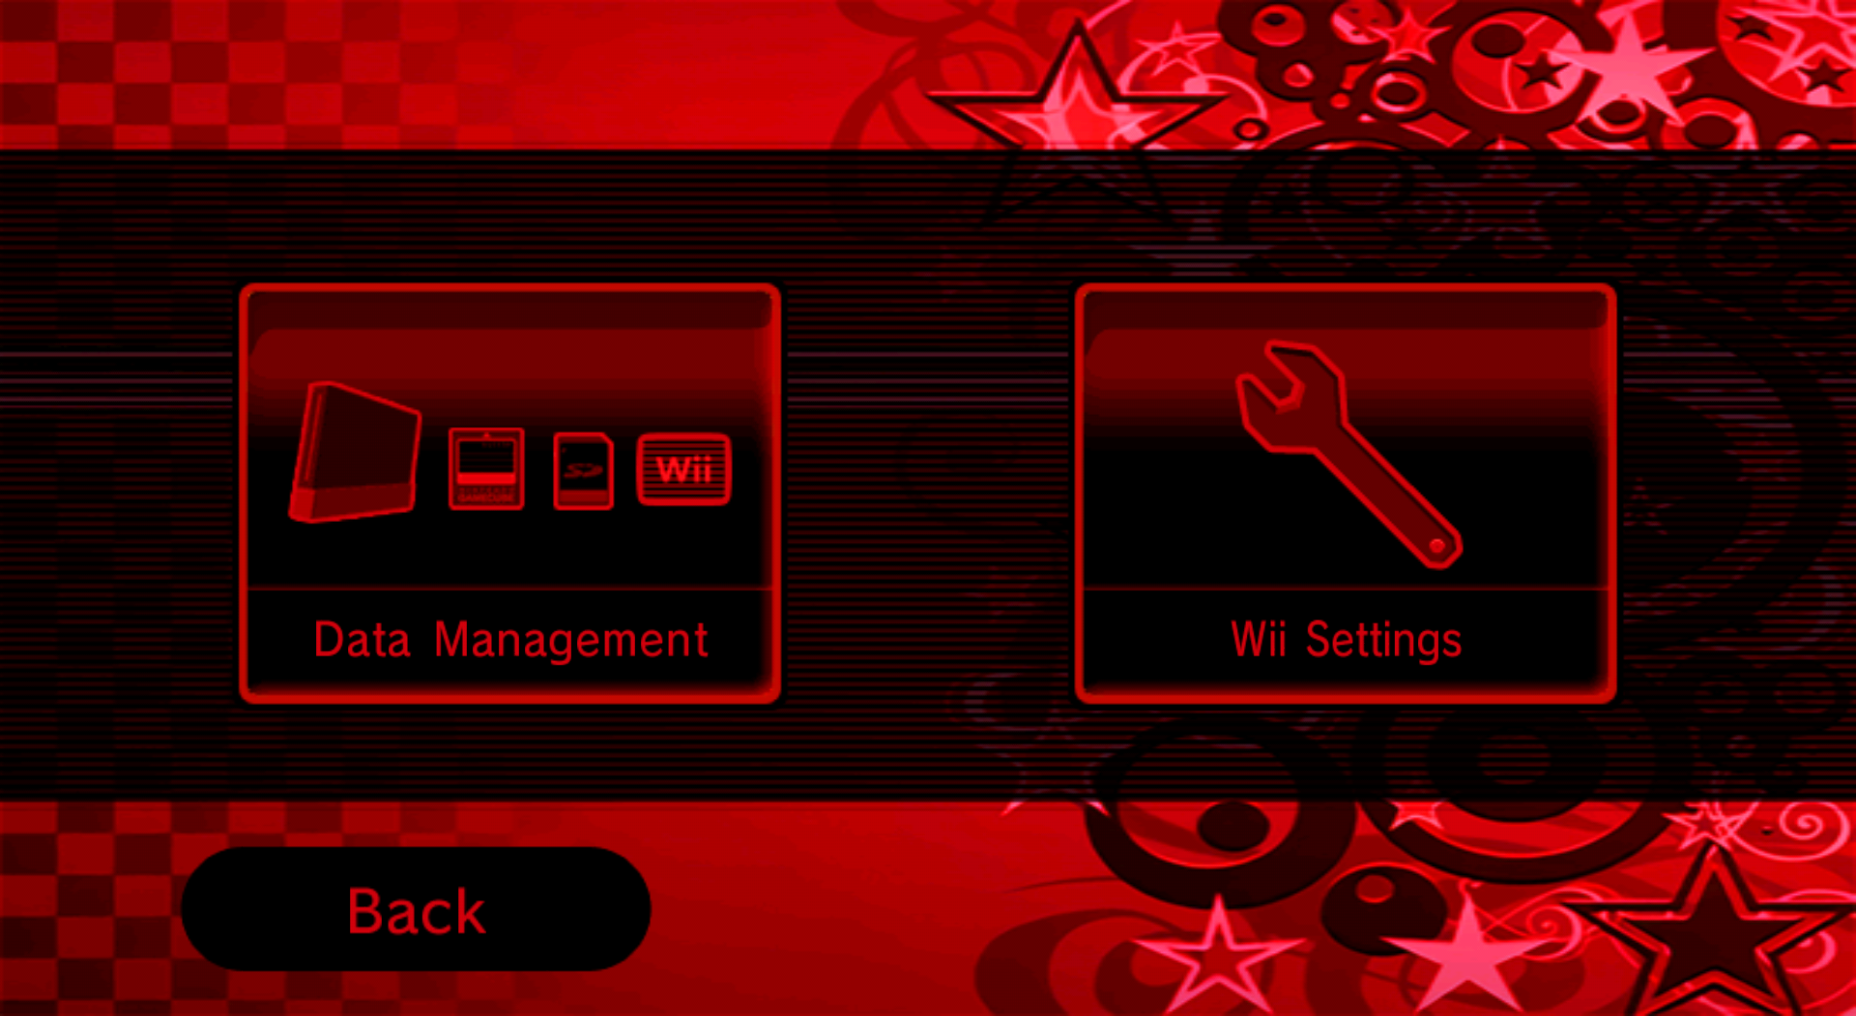 Wii Options menu - Red